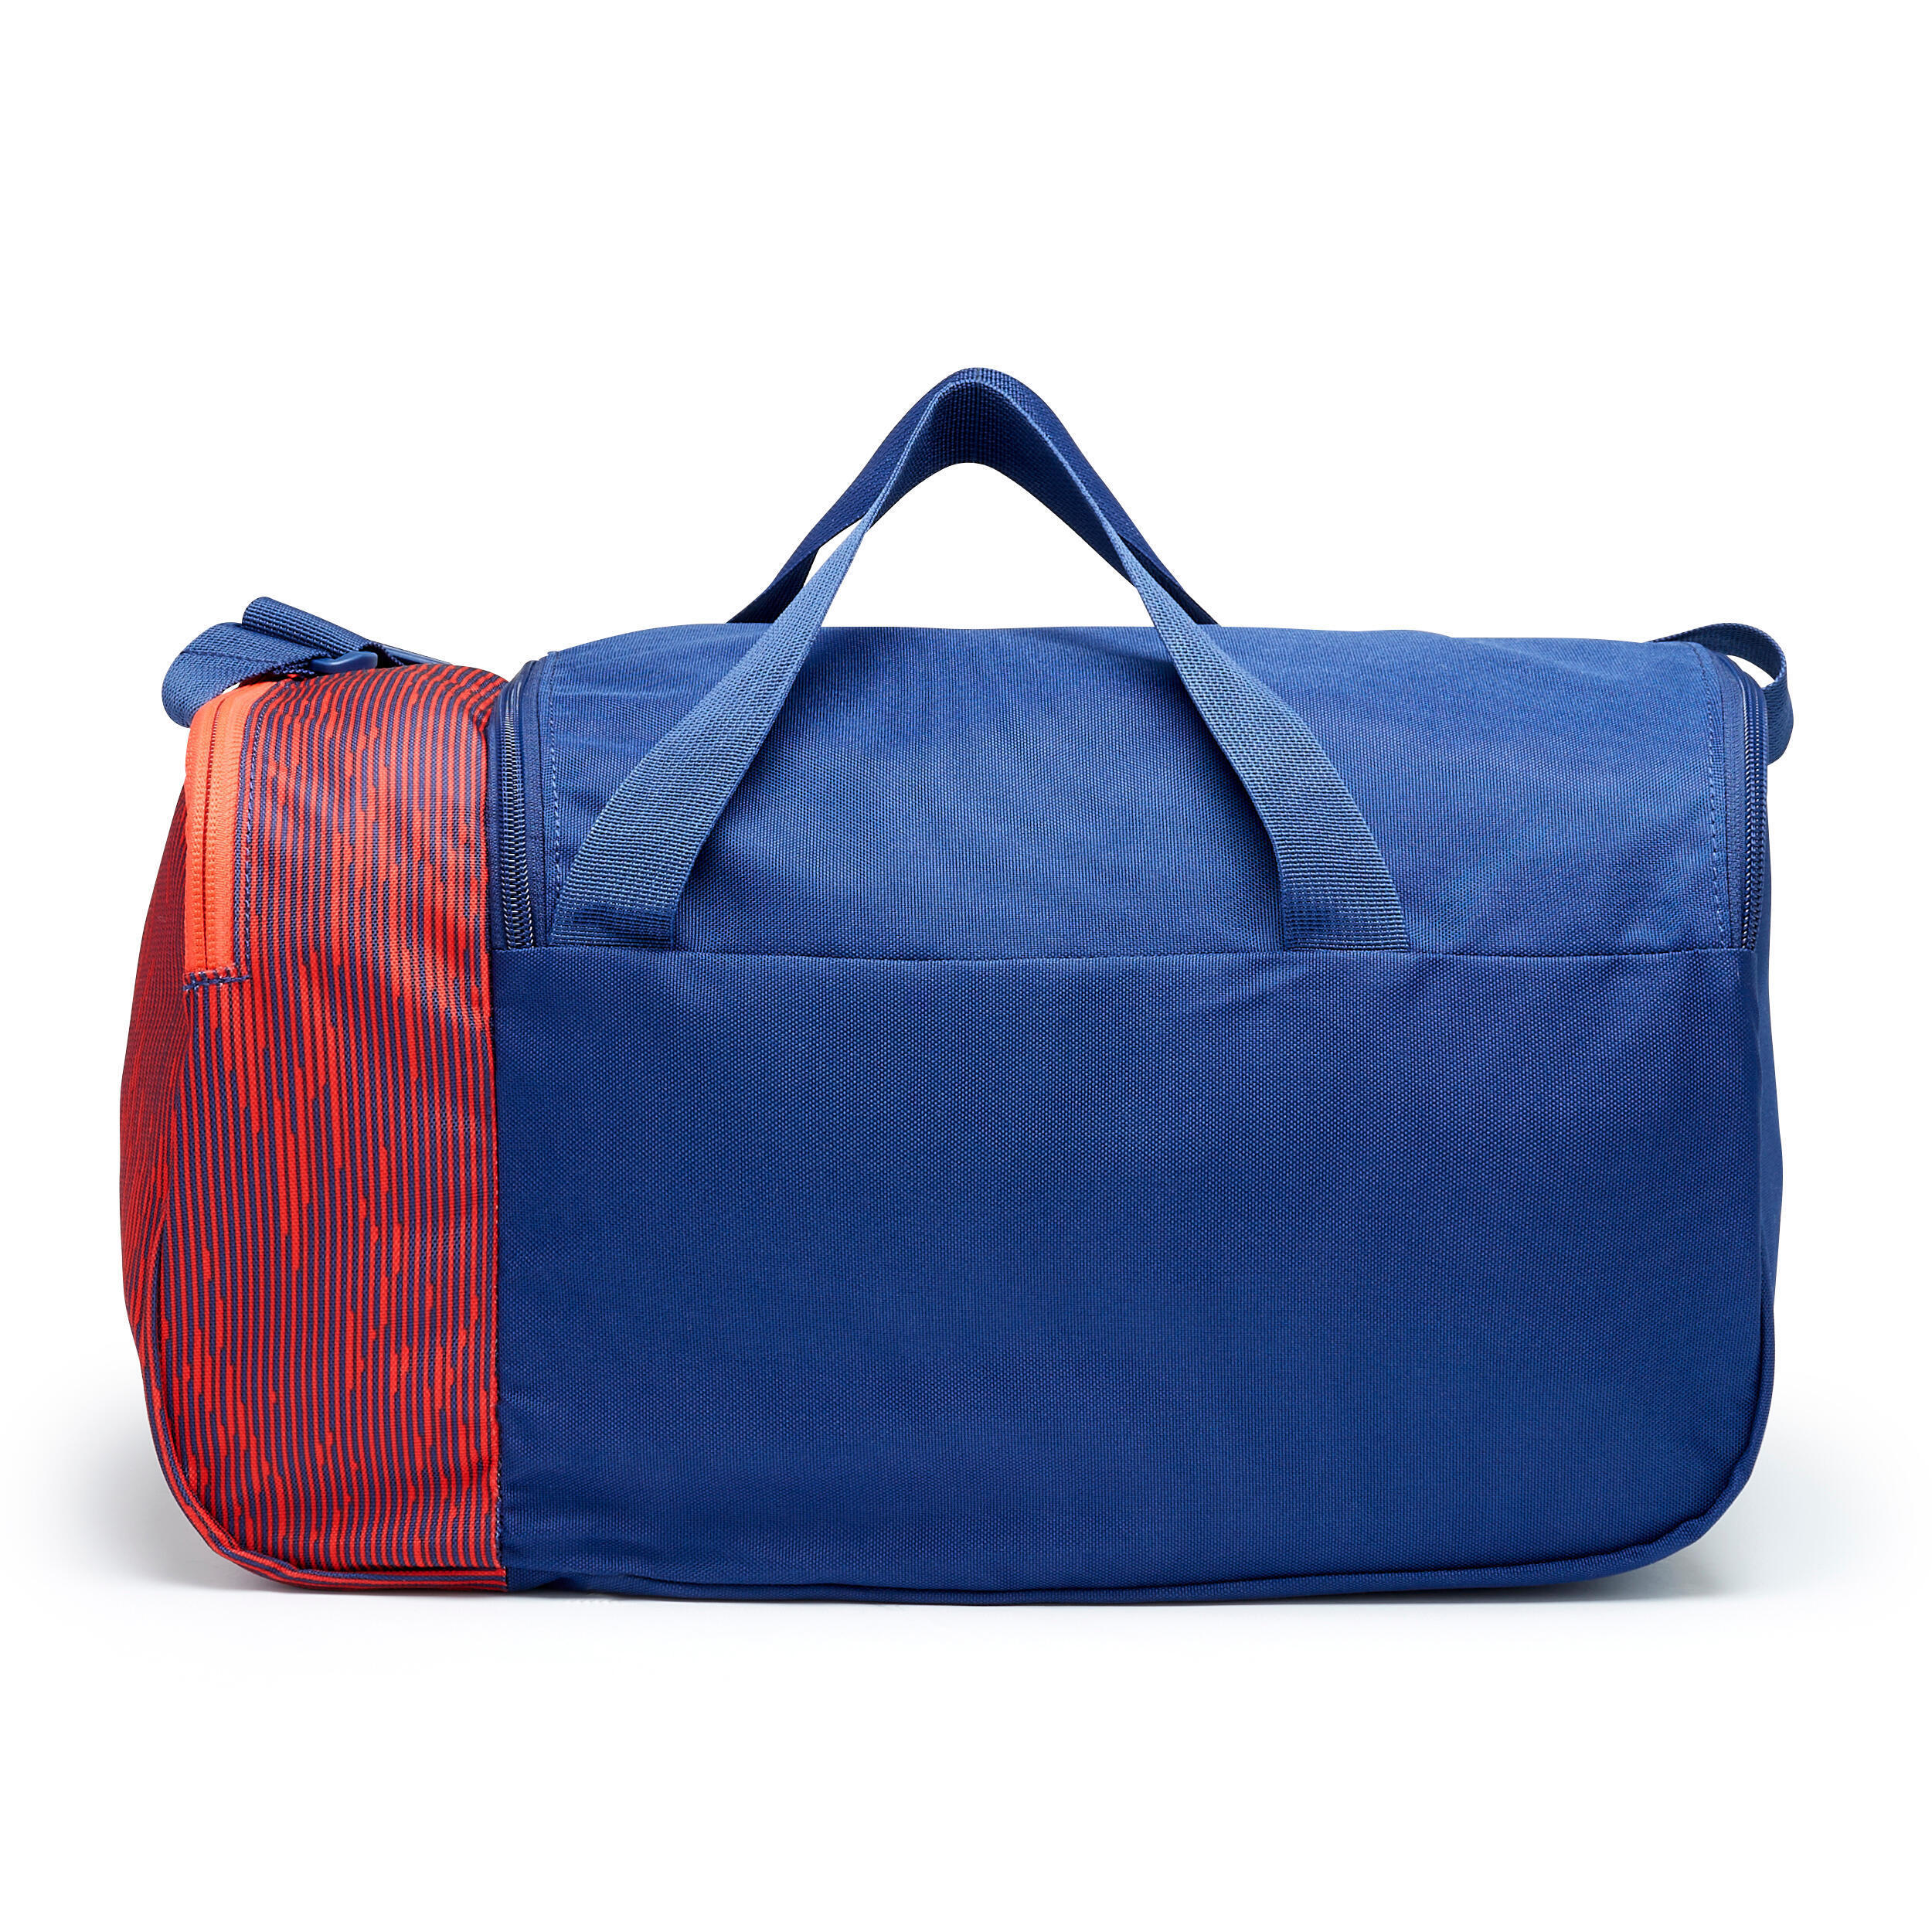 20L Bag Essential - Blue 4/6